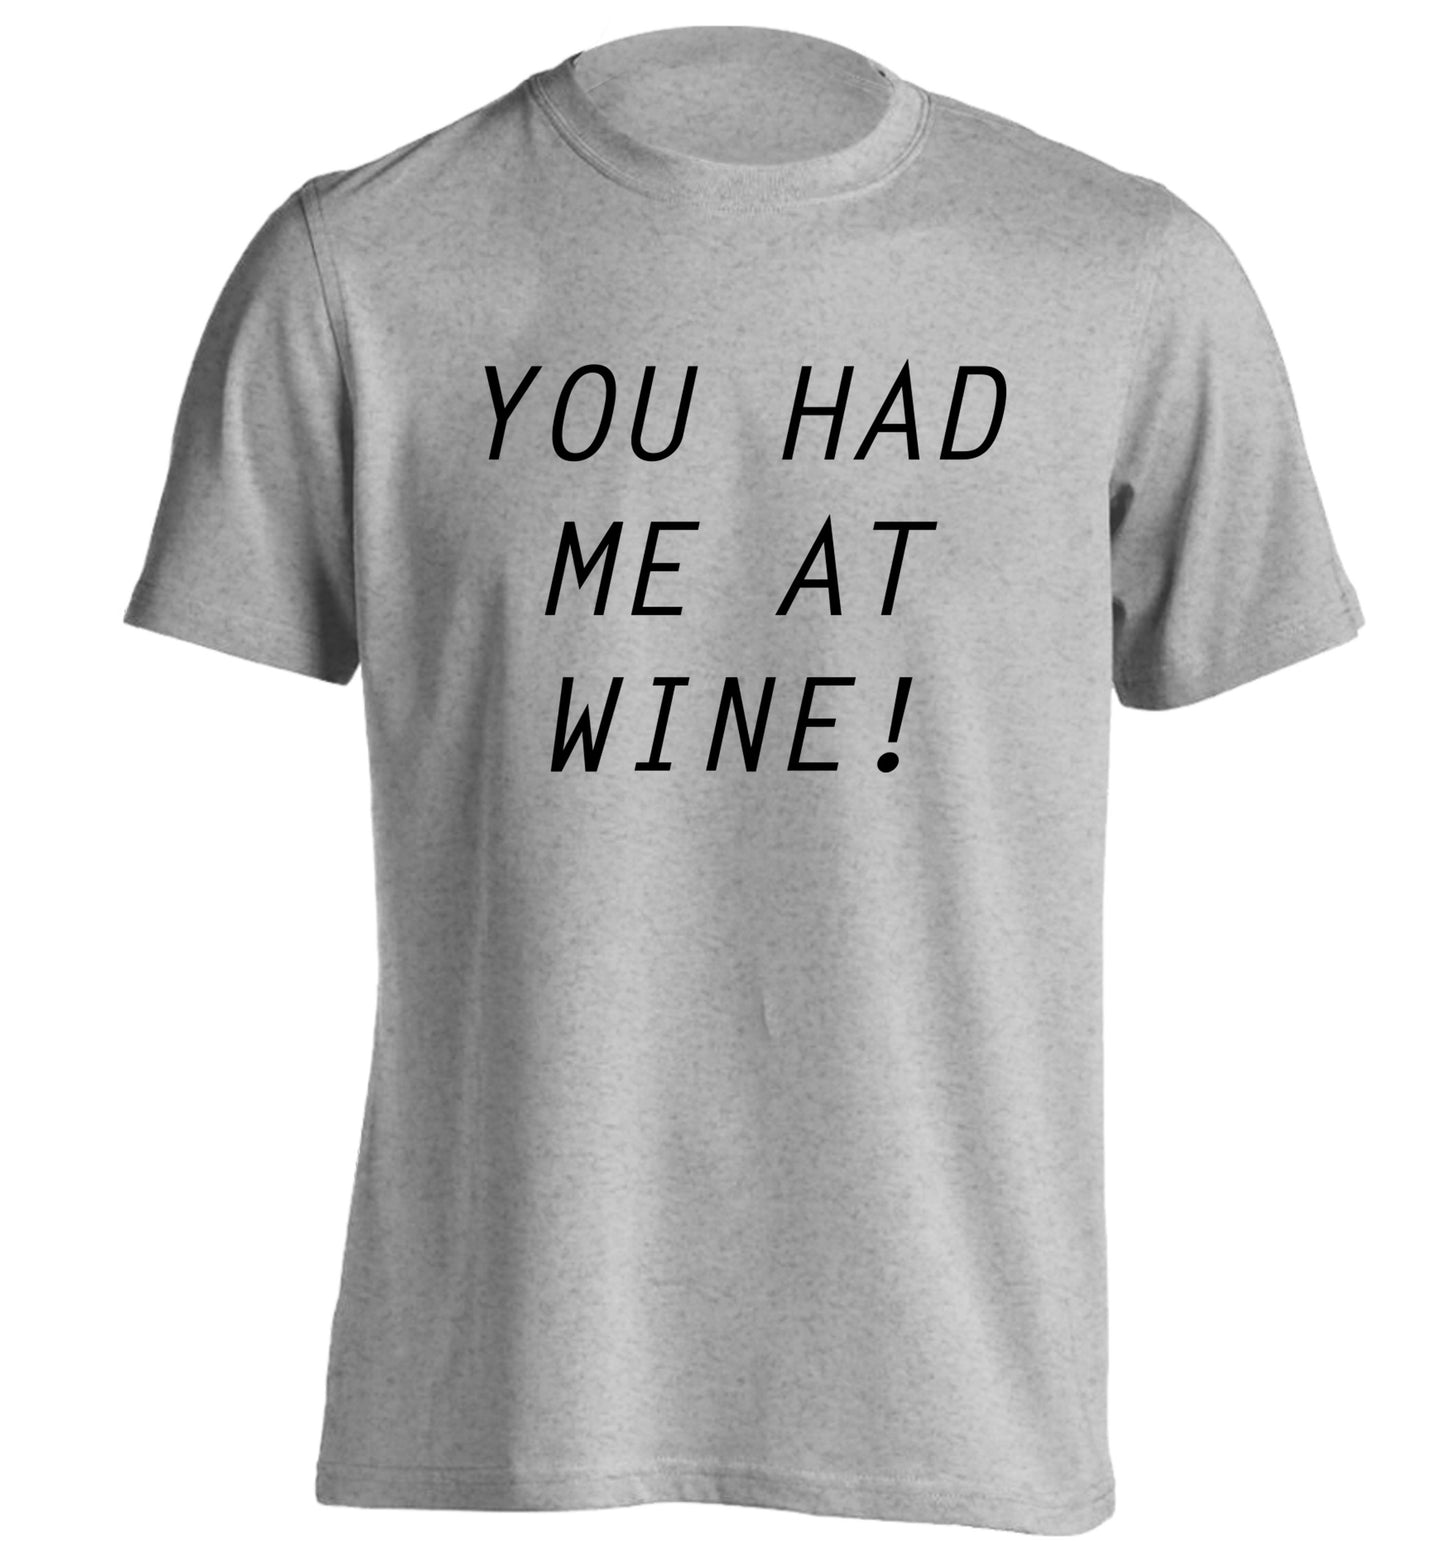 You had me at wine adults unisex grey Tshirt 2XL